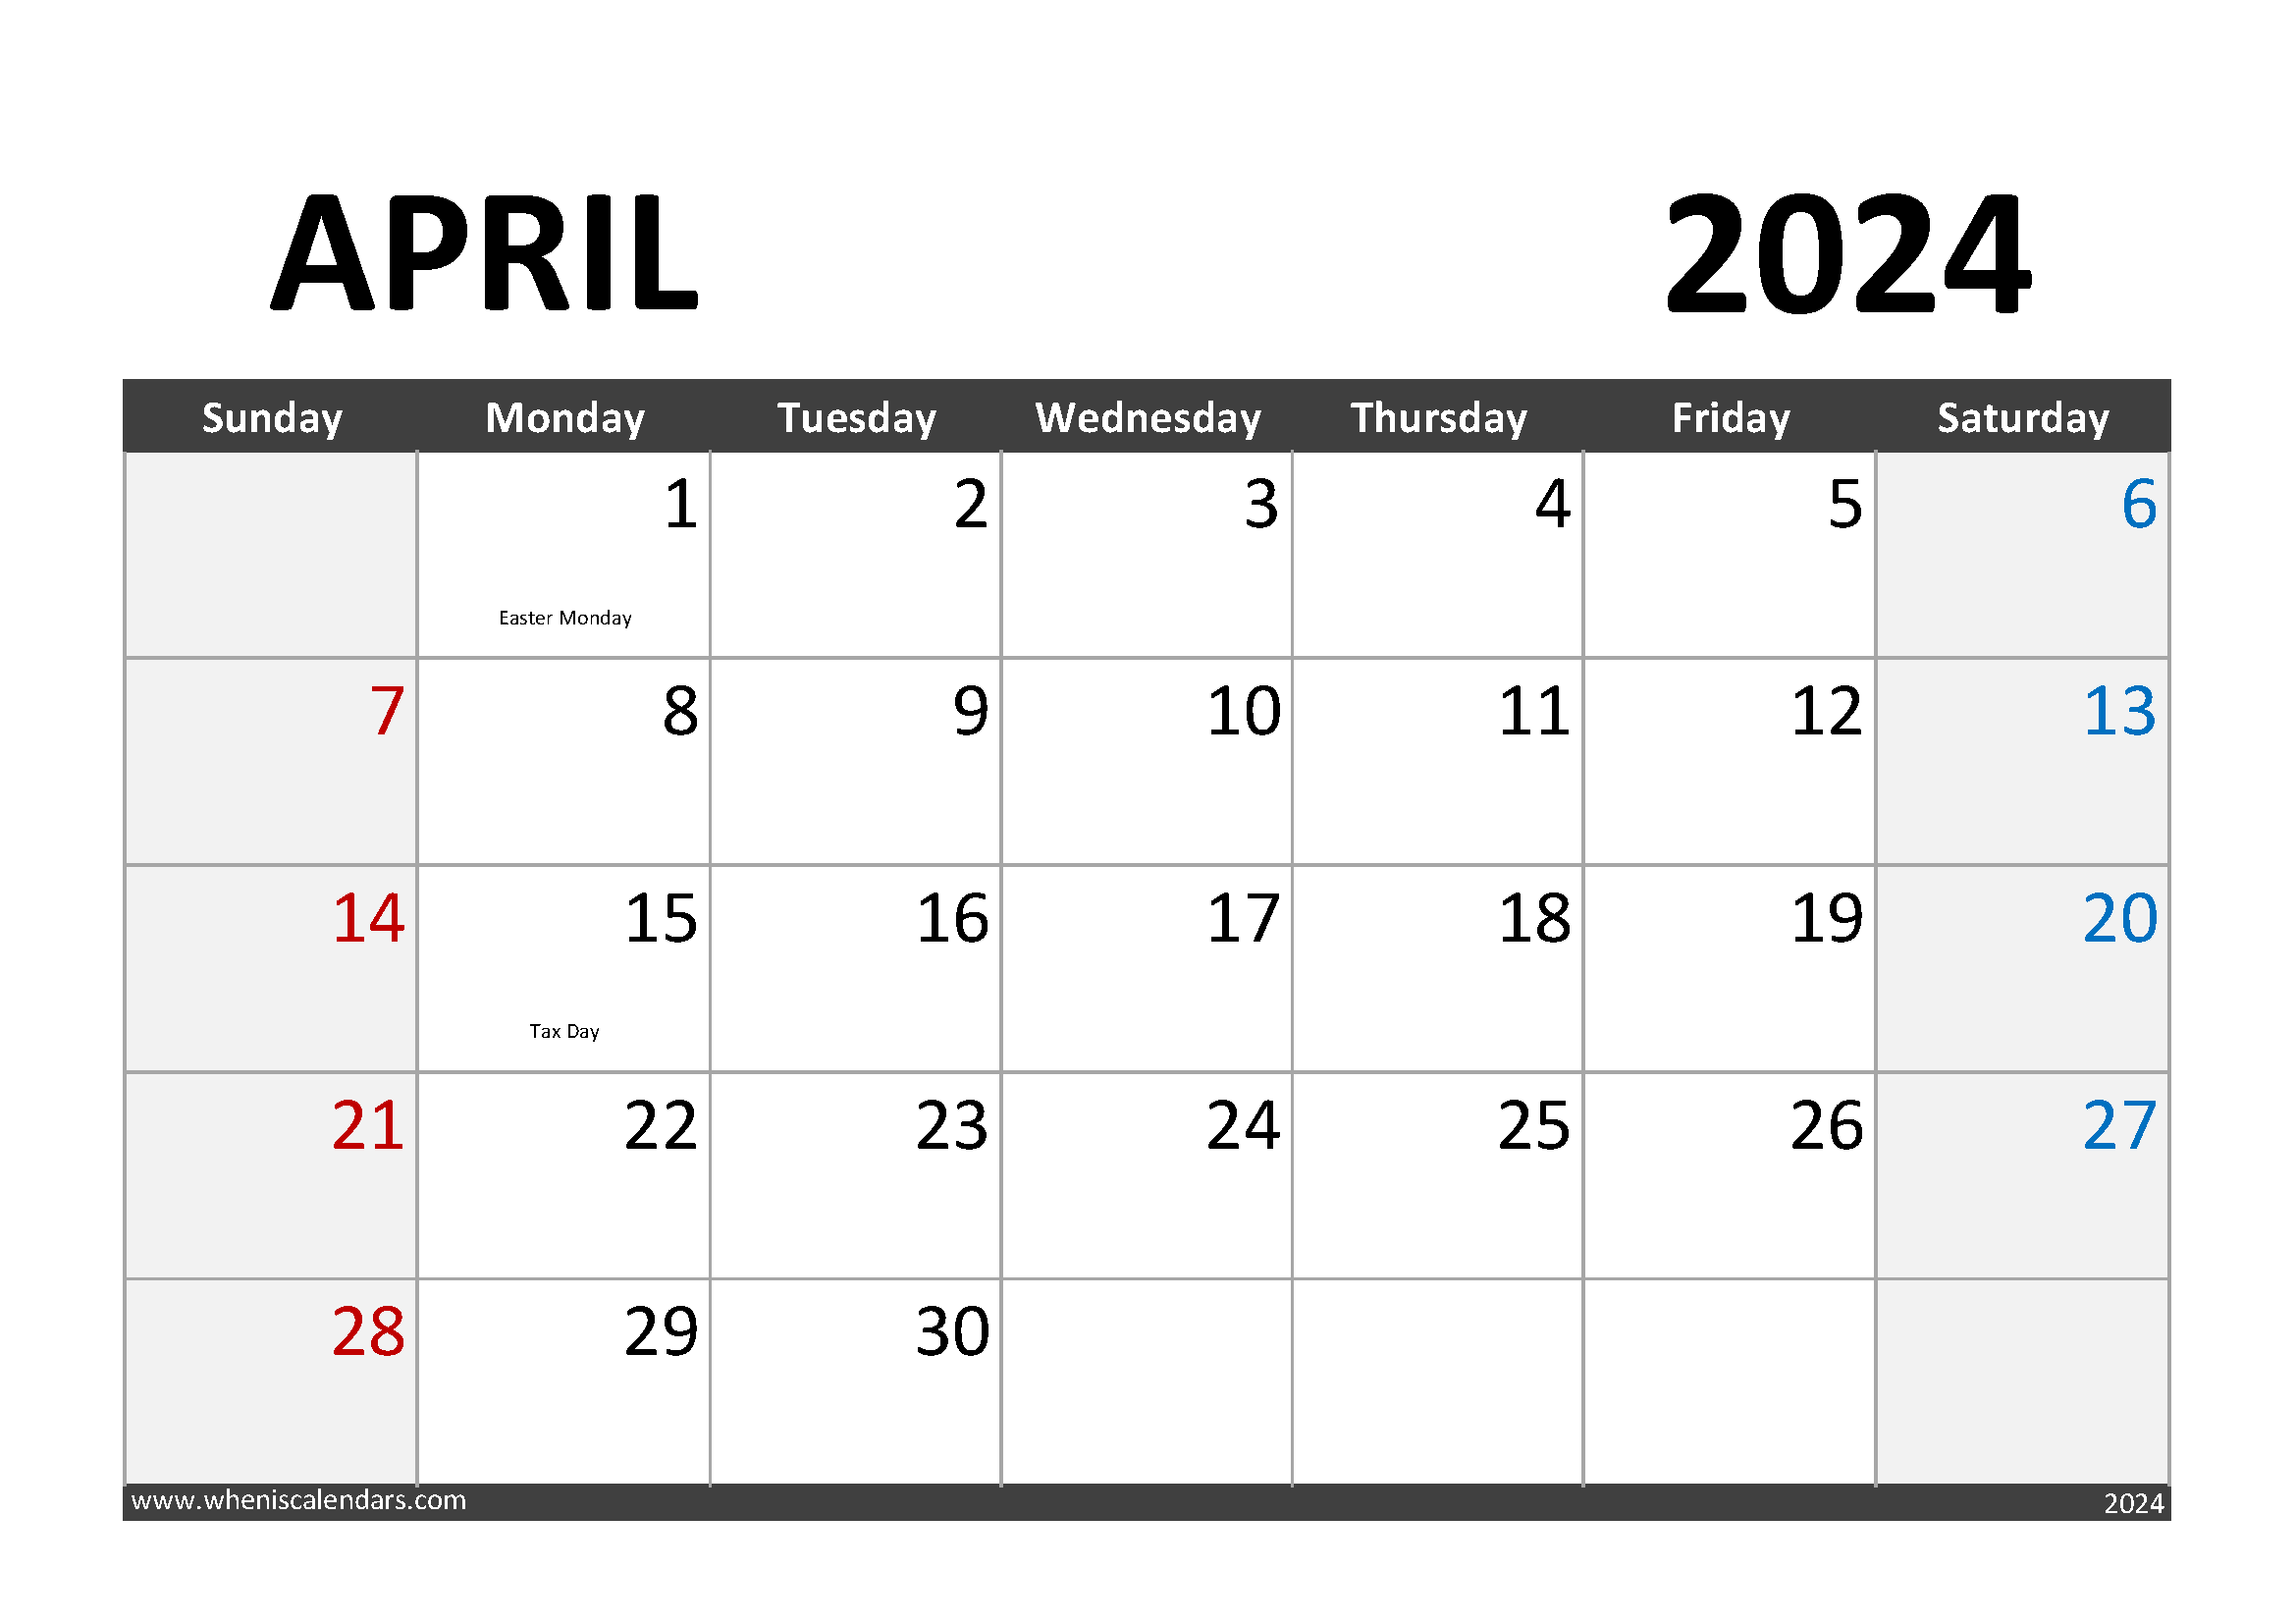 April 2024 Calendar With Holidays A4004